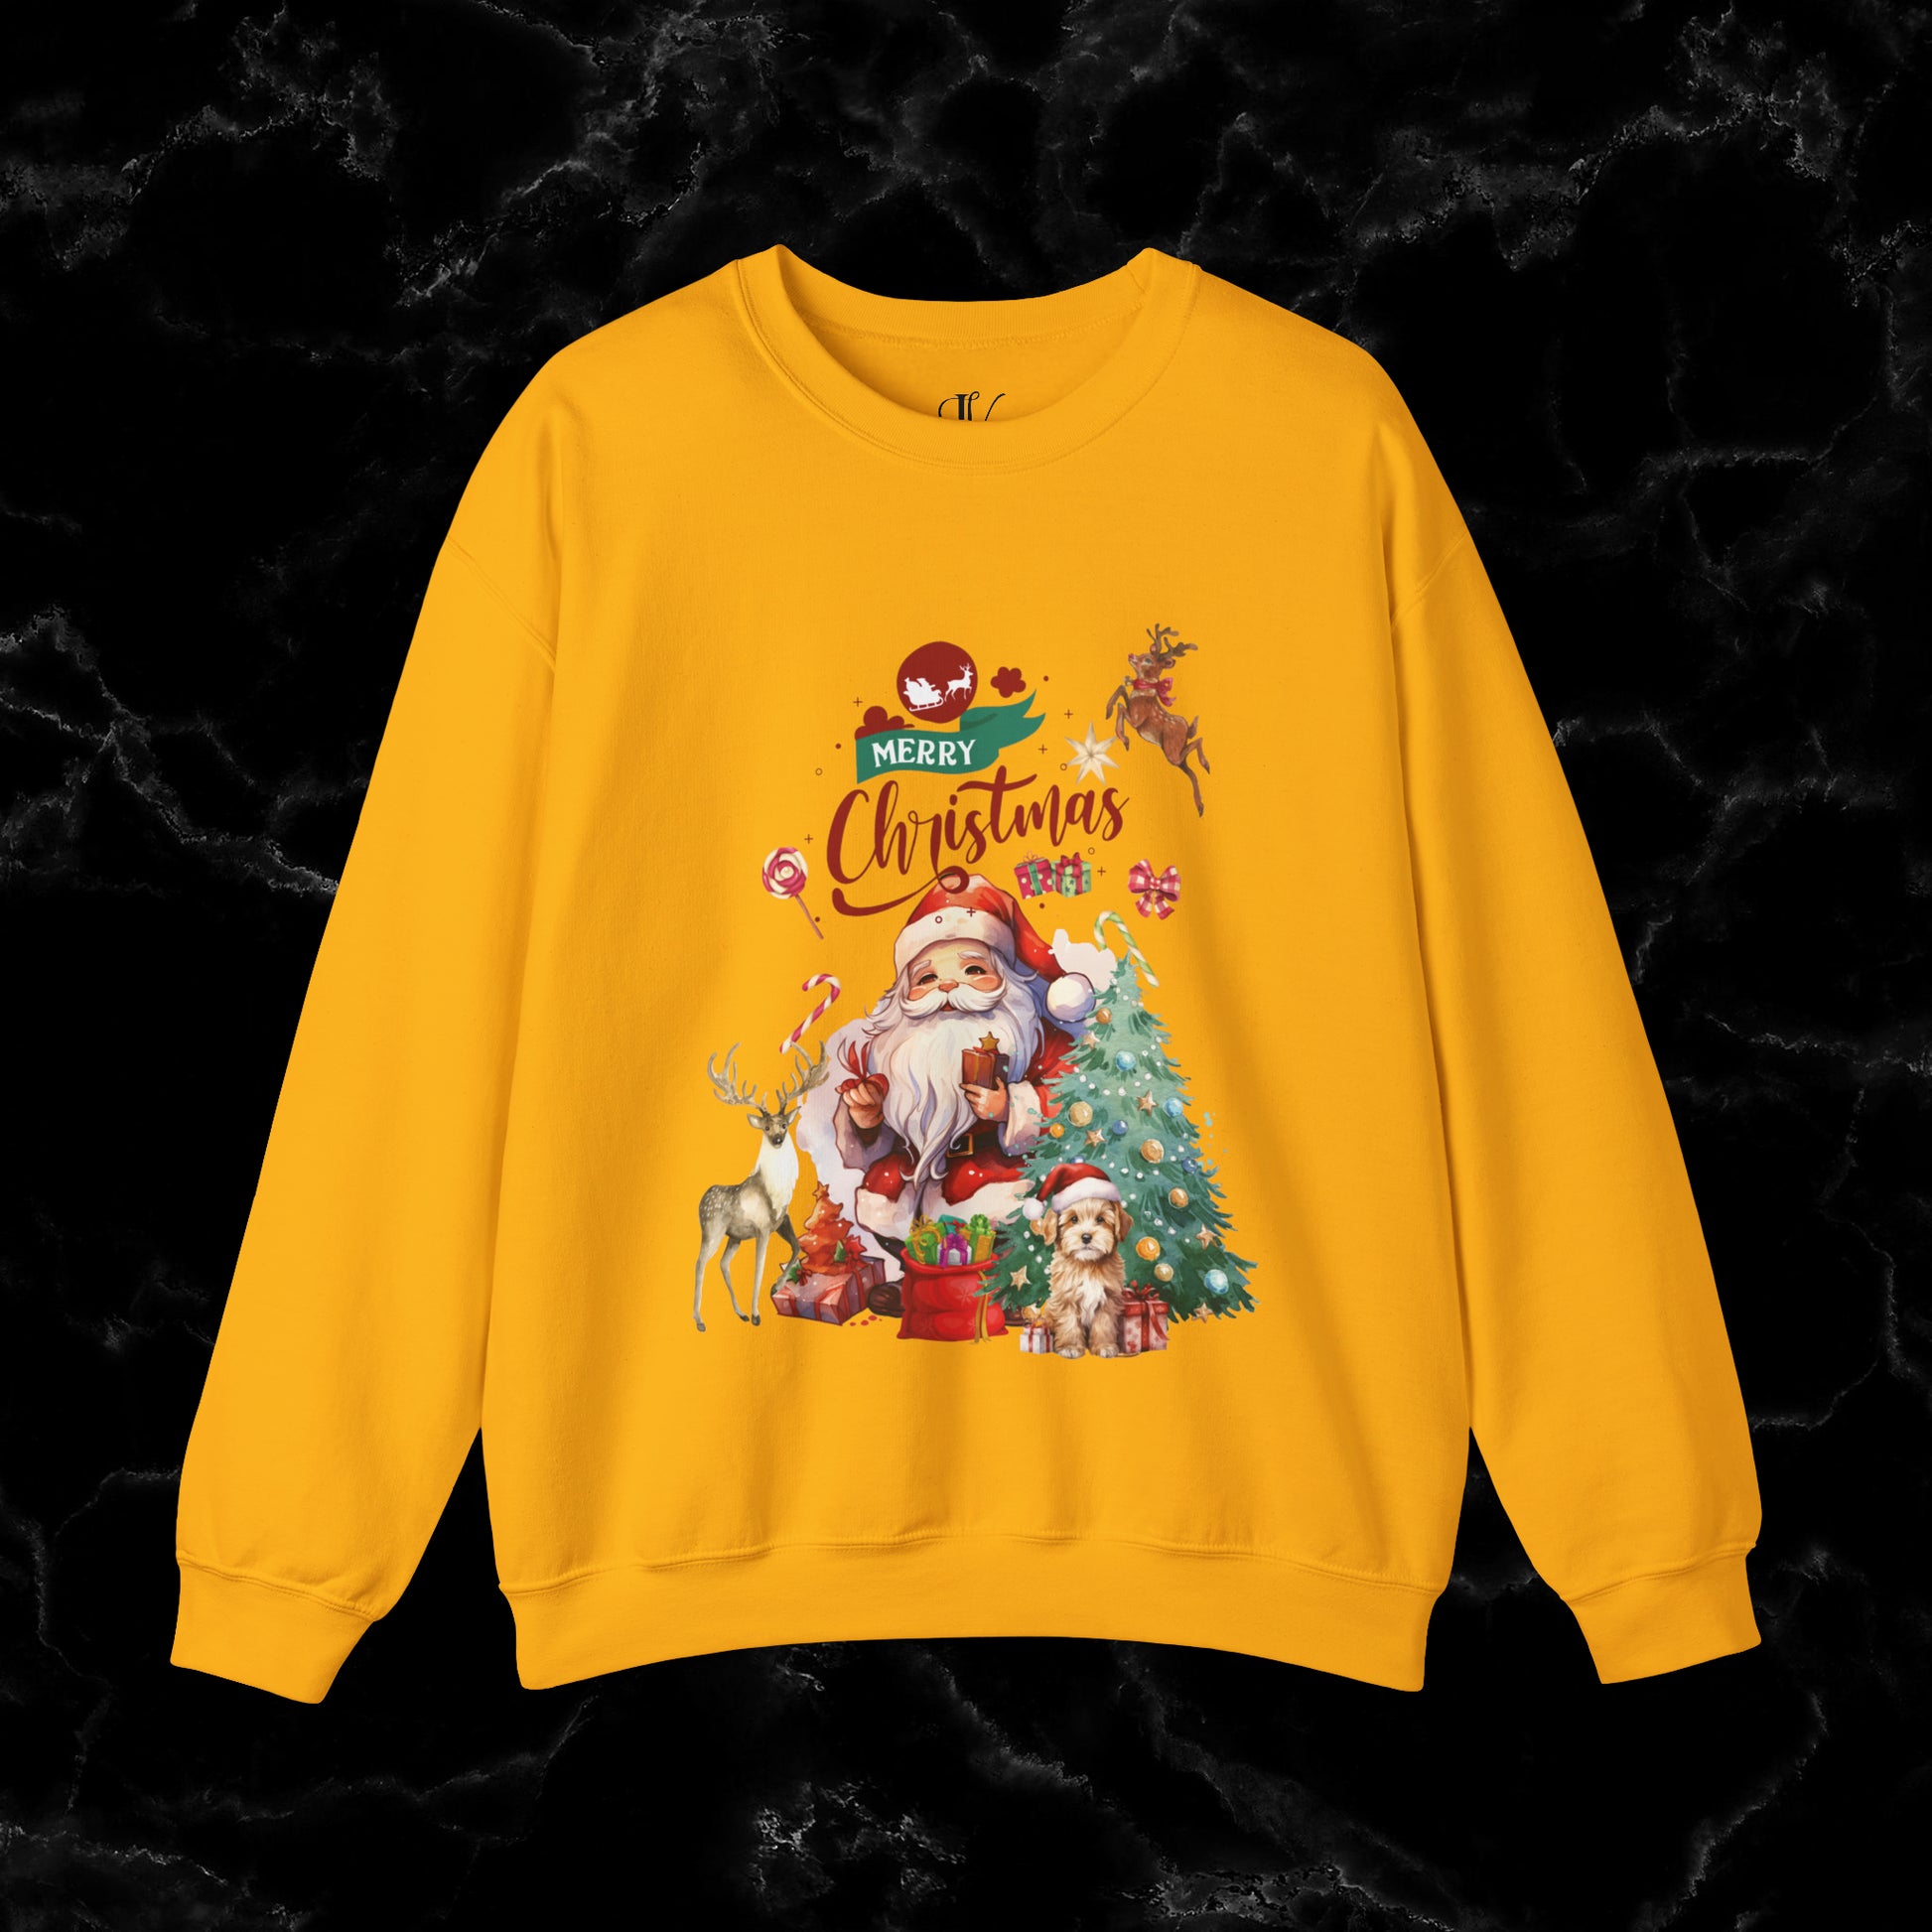 Merry Christmas Sweatshirt | Christmas Shirt - Matching Christmas Shirt - Santa Claus Merry Christmas Sweatshirt - Holiday Gift - Christmas Gift Sweatshirt S Gold 